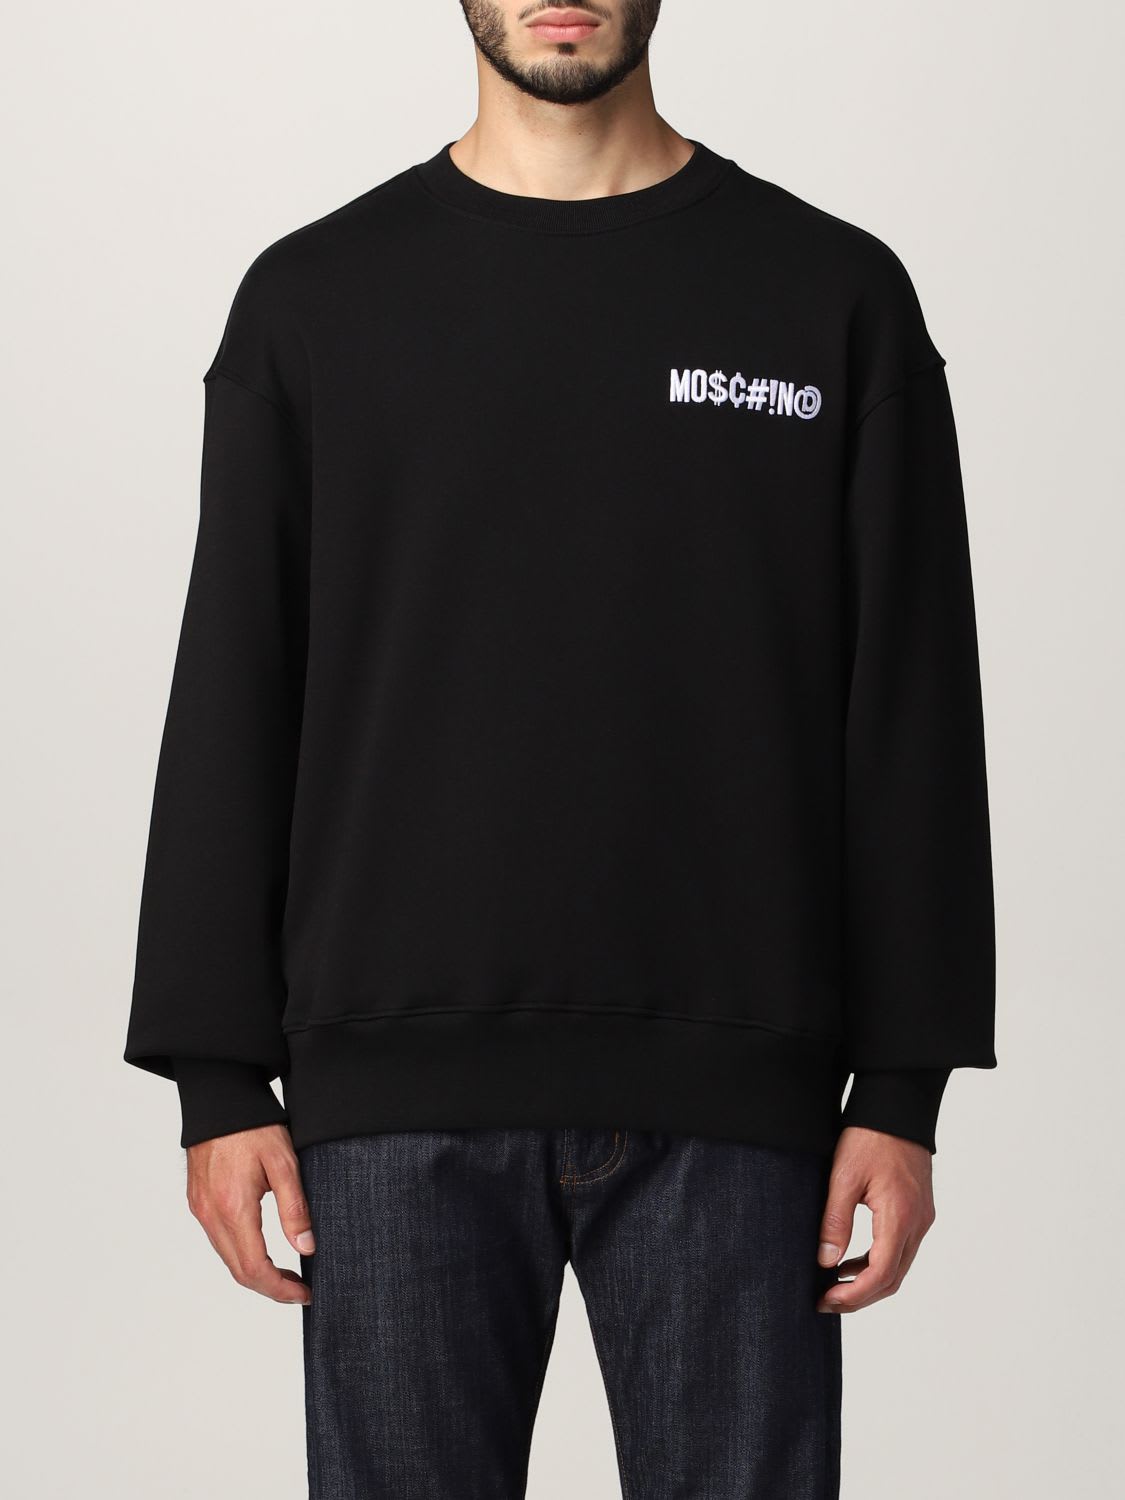 Moschino Couture Sweatshirt Symbols Sweatshirt With Moschino Couture Logo In Cotton